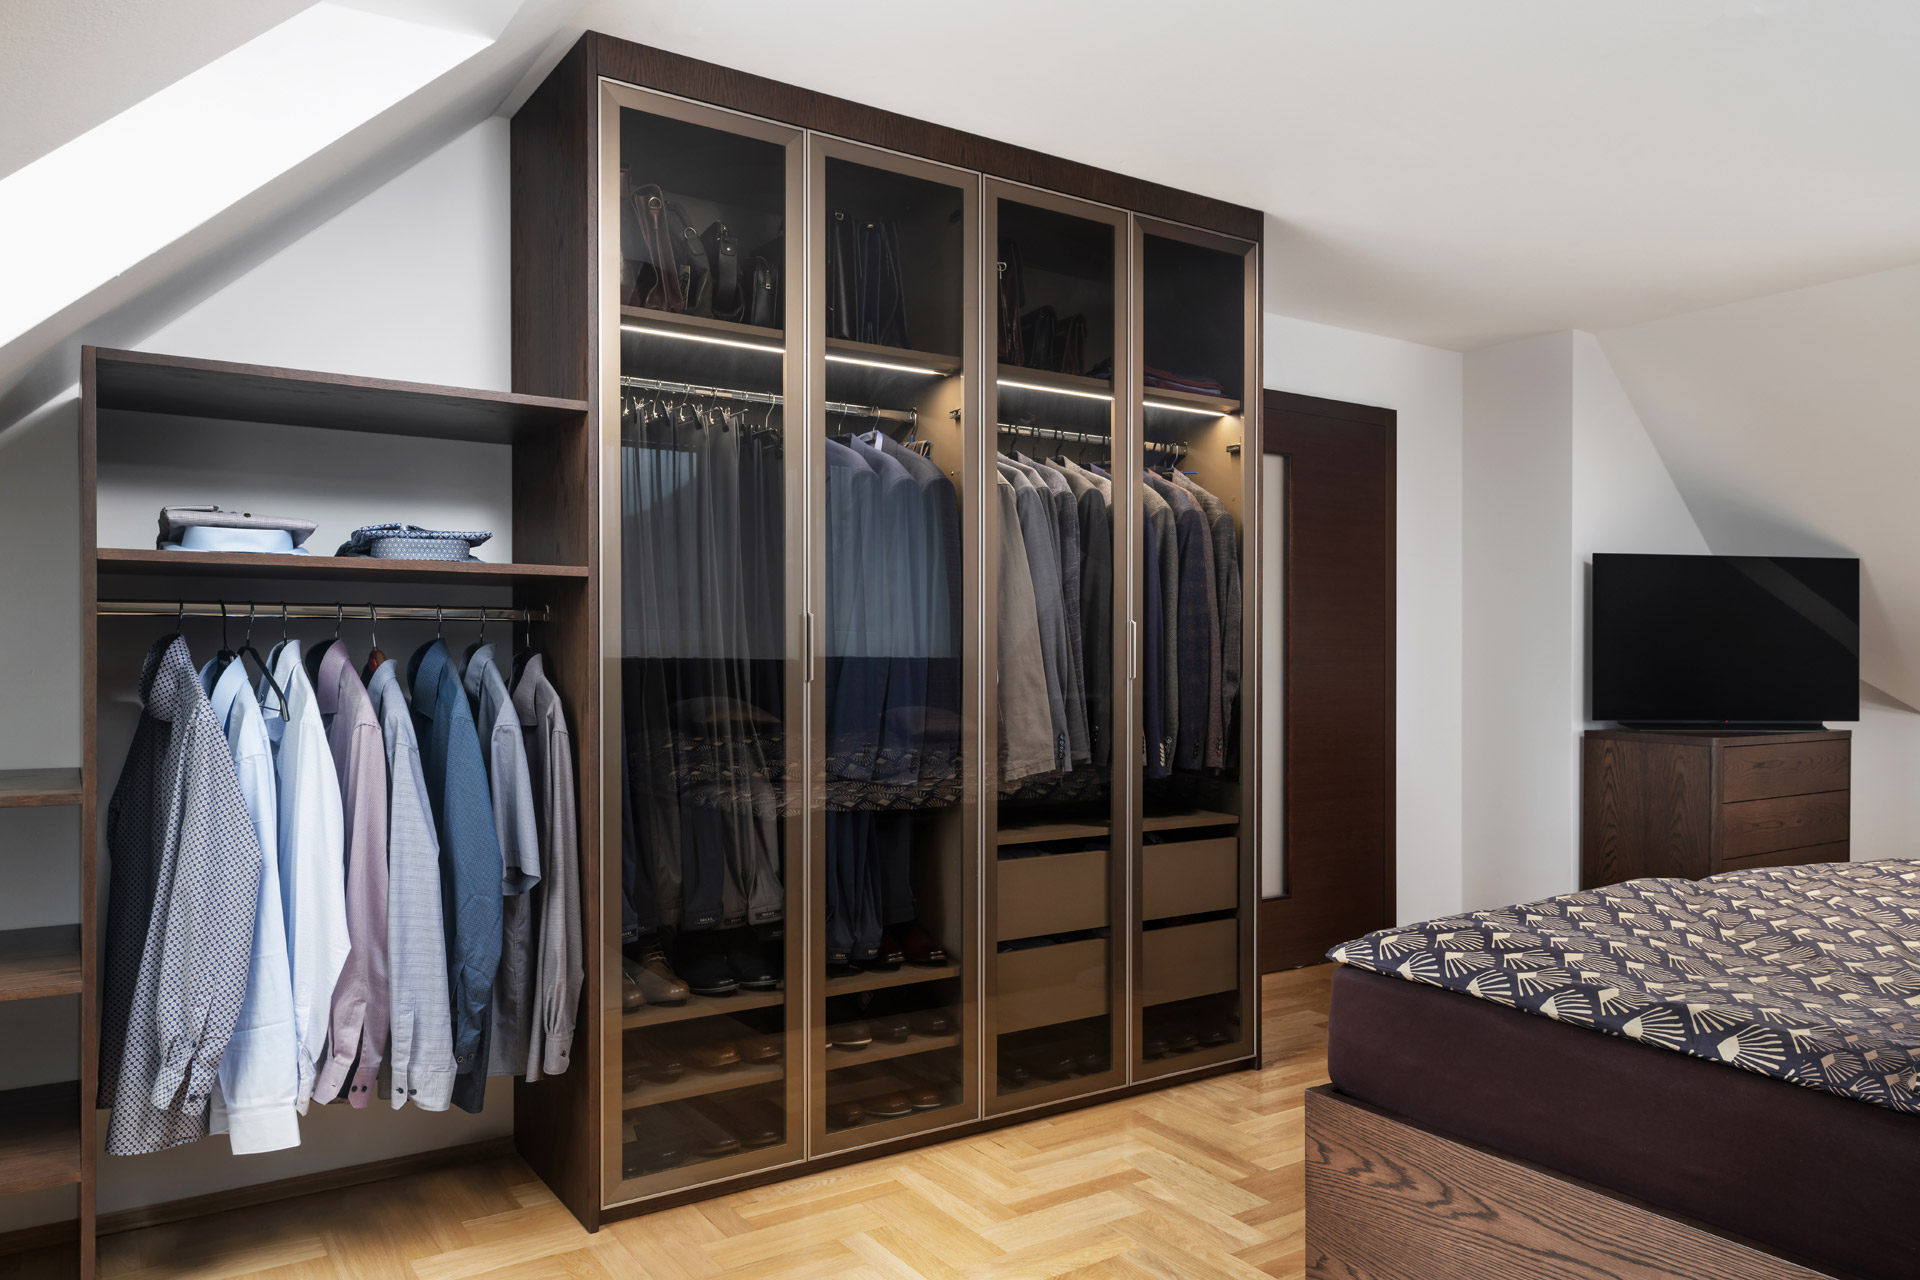 Hanák Furniture Realization of wardrobe and closet